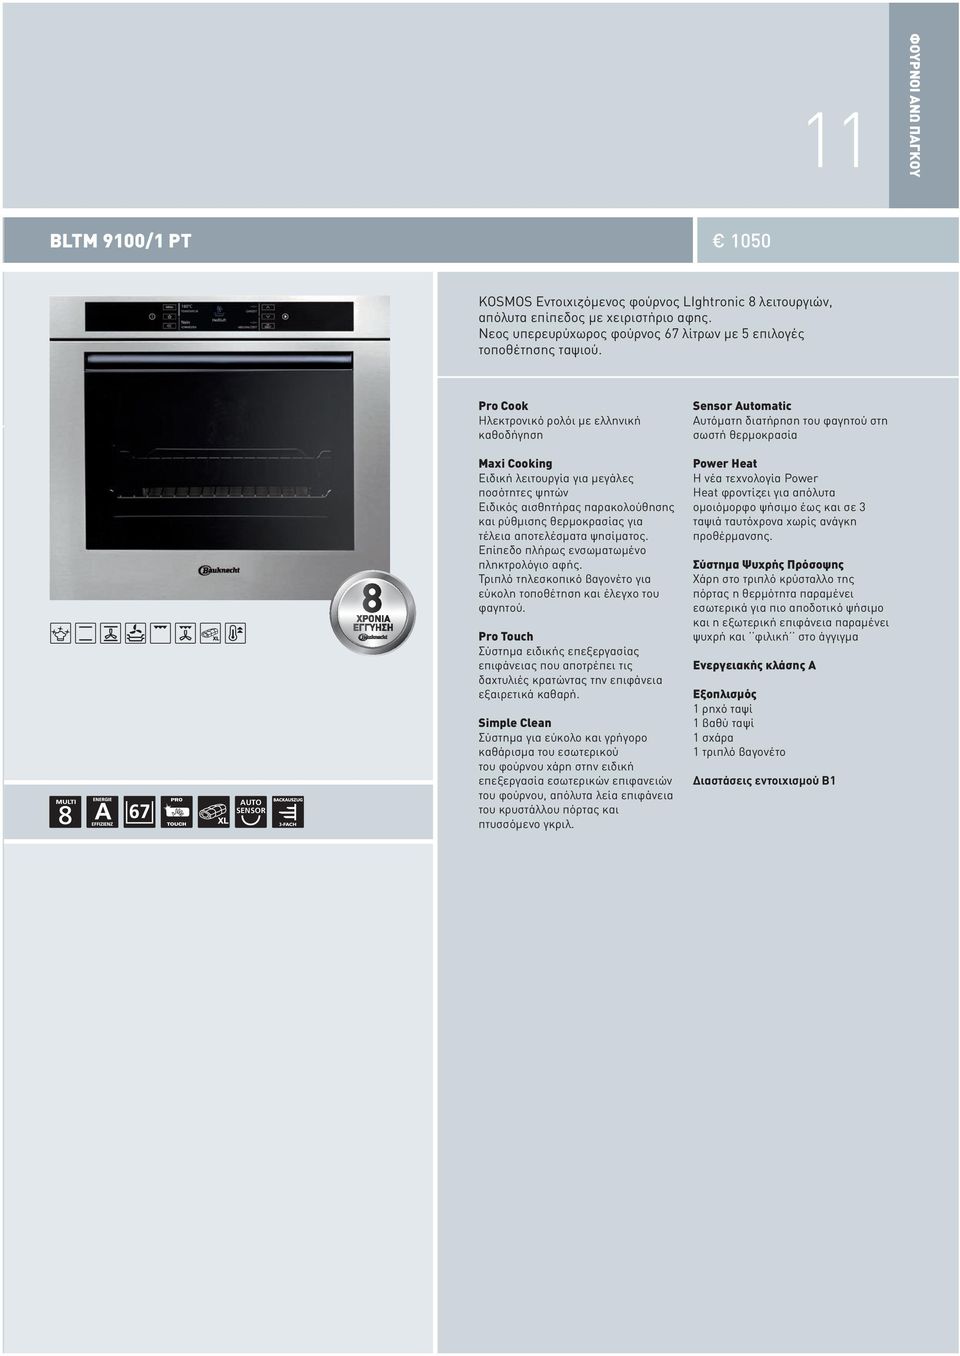 AUTO SENSOR Pro Cook Ηλεκτρονικό ρολόι με ελληνική καθοδήγηση Maxi Cooking Ειδική λειτουργία για μεγάλες ποσότητες ψητών Ειδικός αισθητήρας παρακολούθησης και ρύθμισης θερμοκρασίας για τέλεια